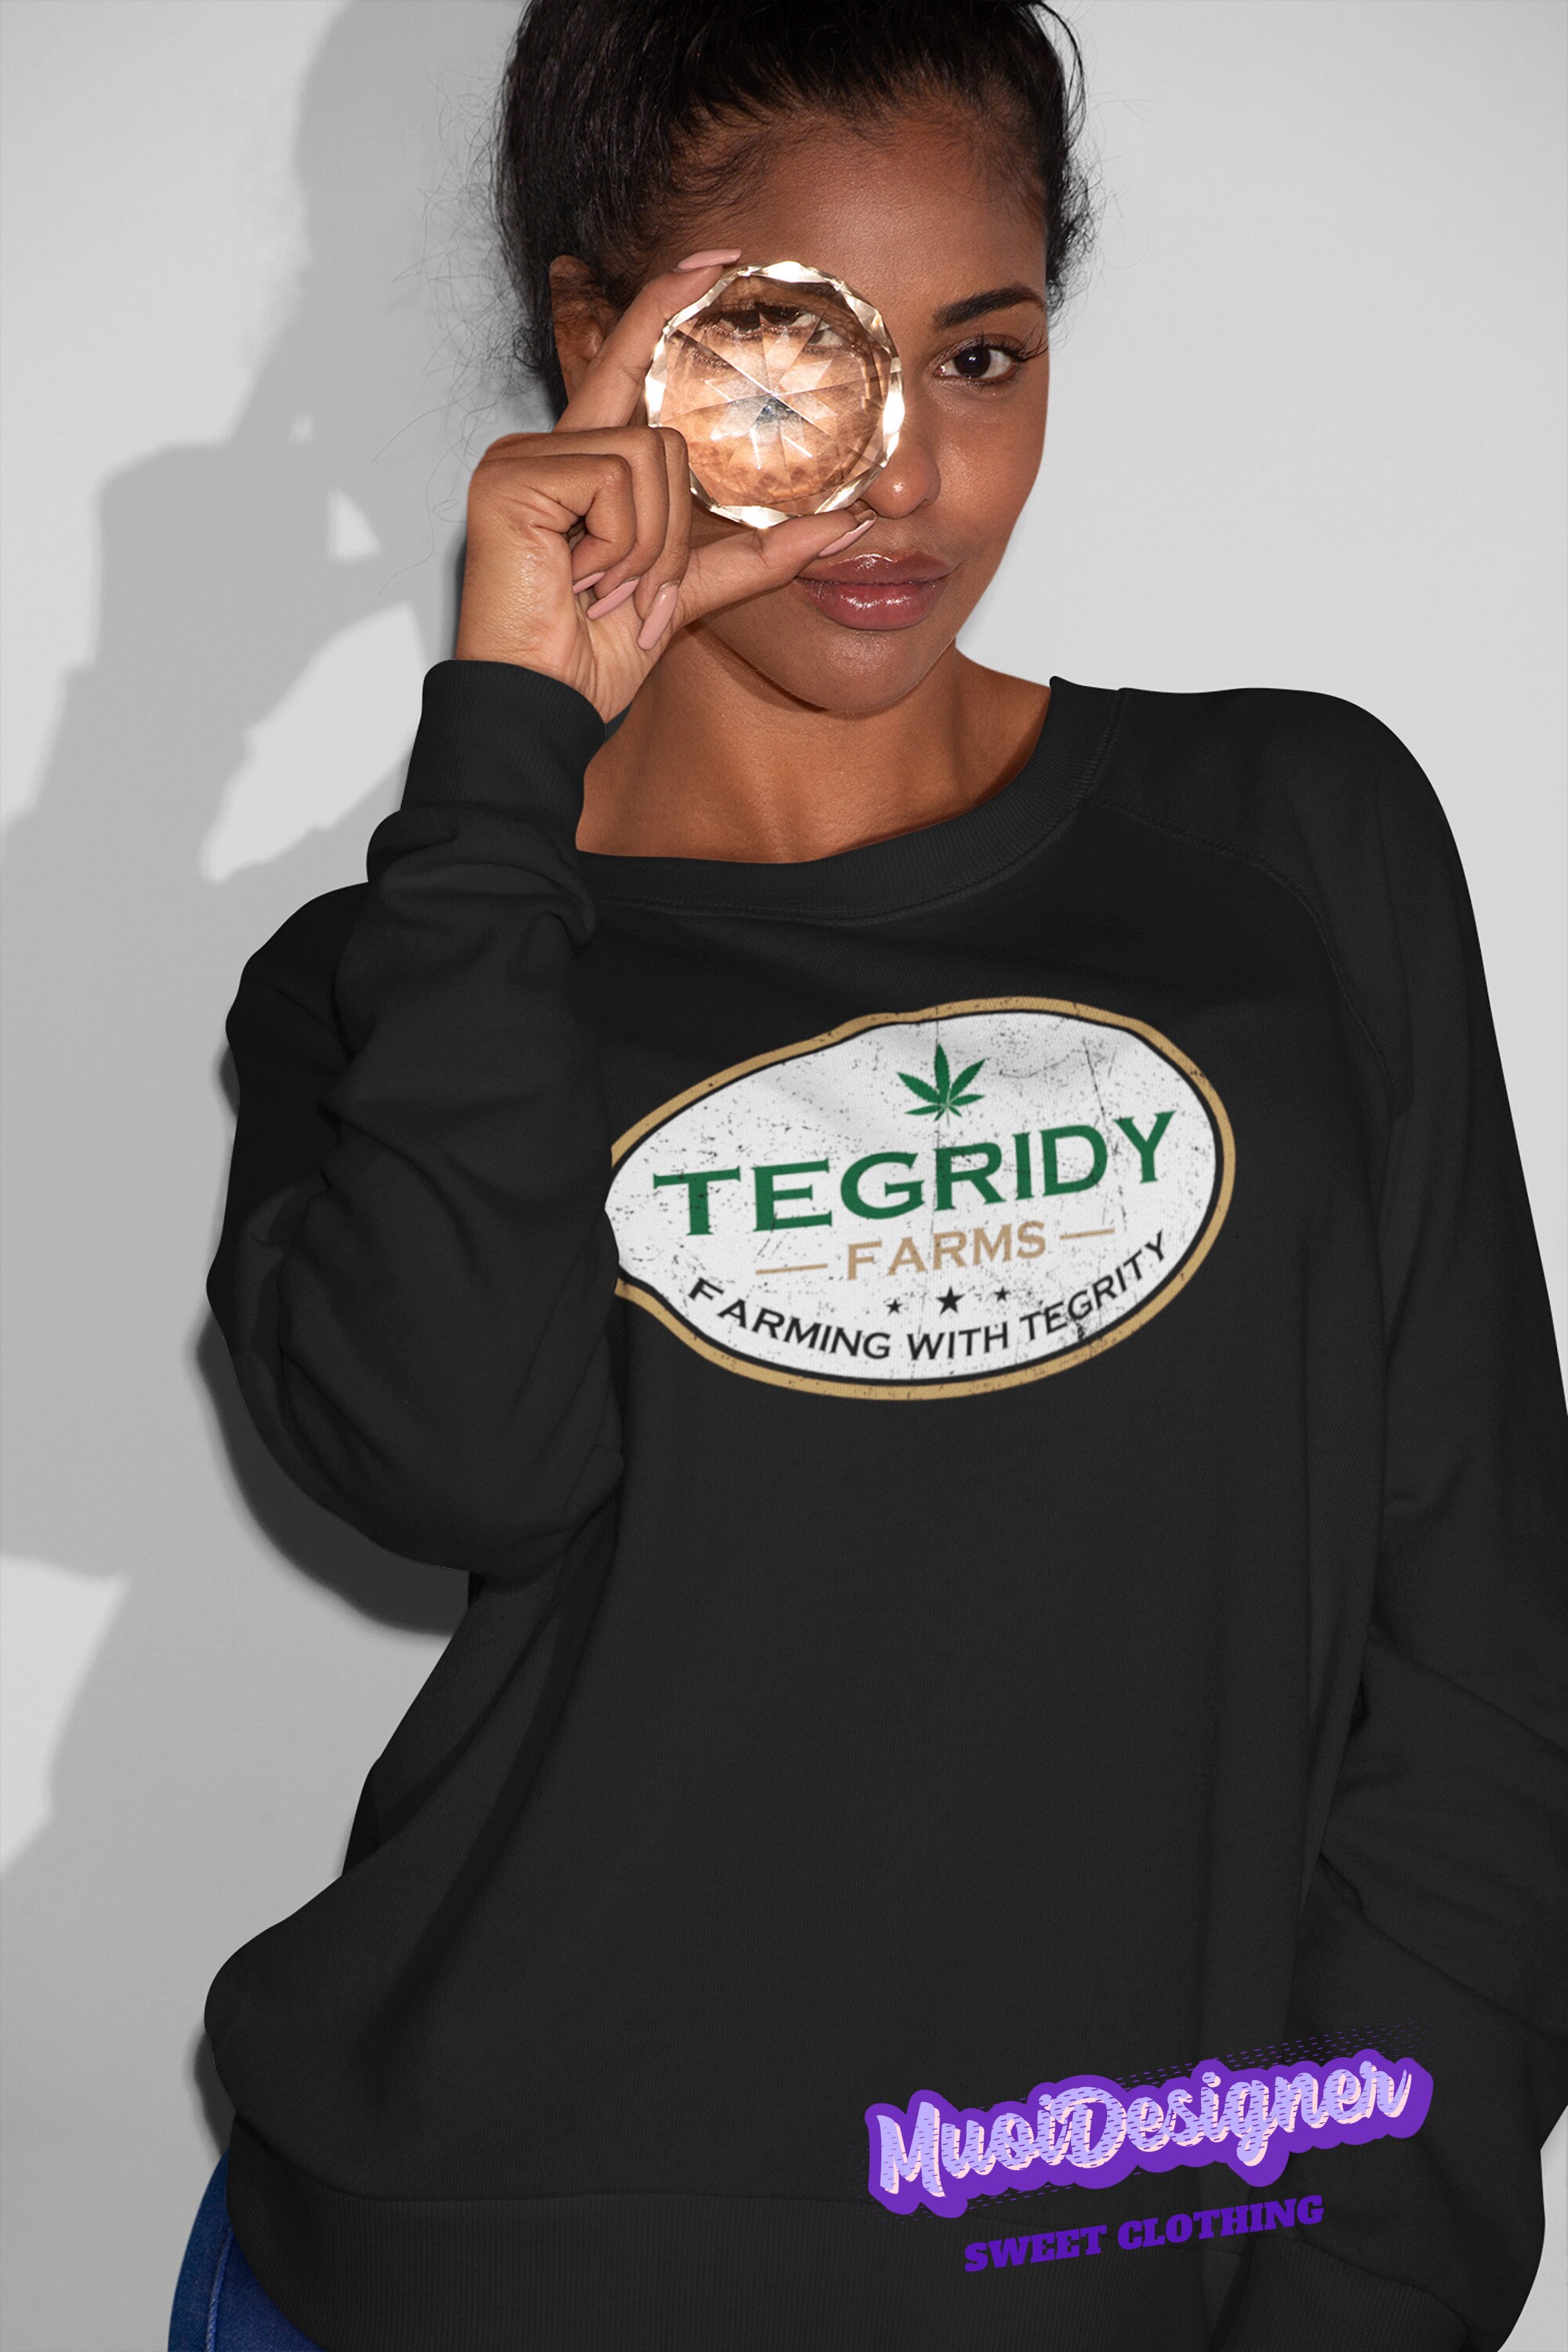 Discover Tegri-dy Farms South T-Shirt, Farming with Tegri-dy Shirt, Tegridy Shirt, Weed Shirt, Tegridy Farms Shirt